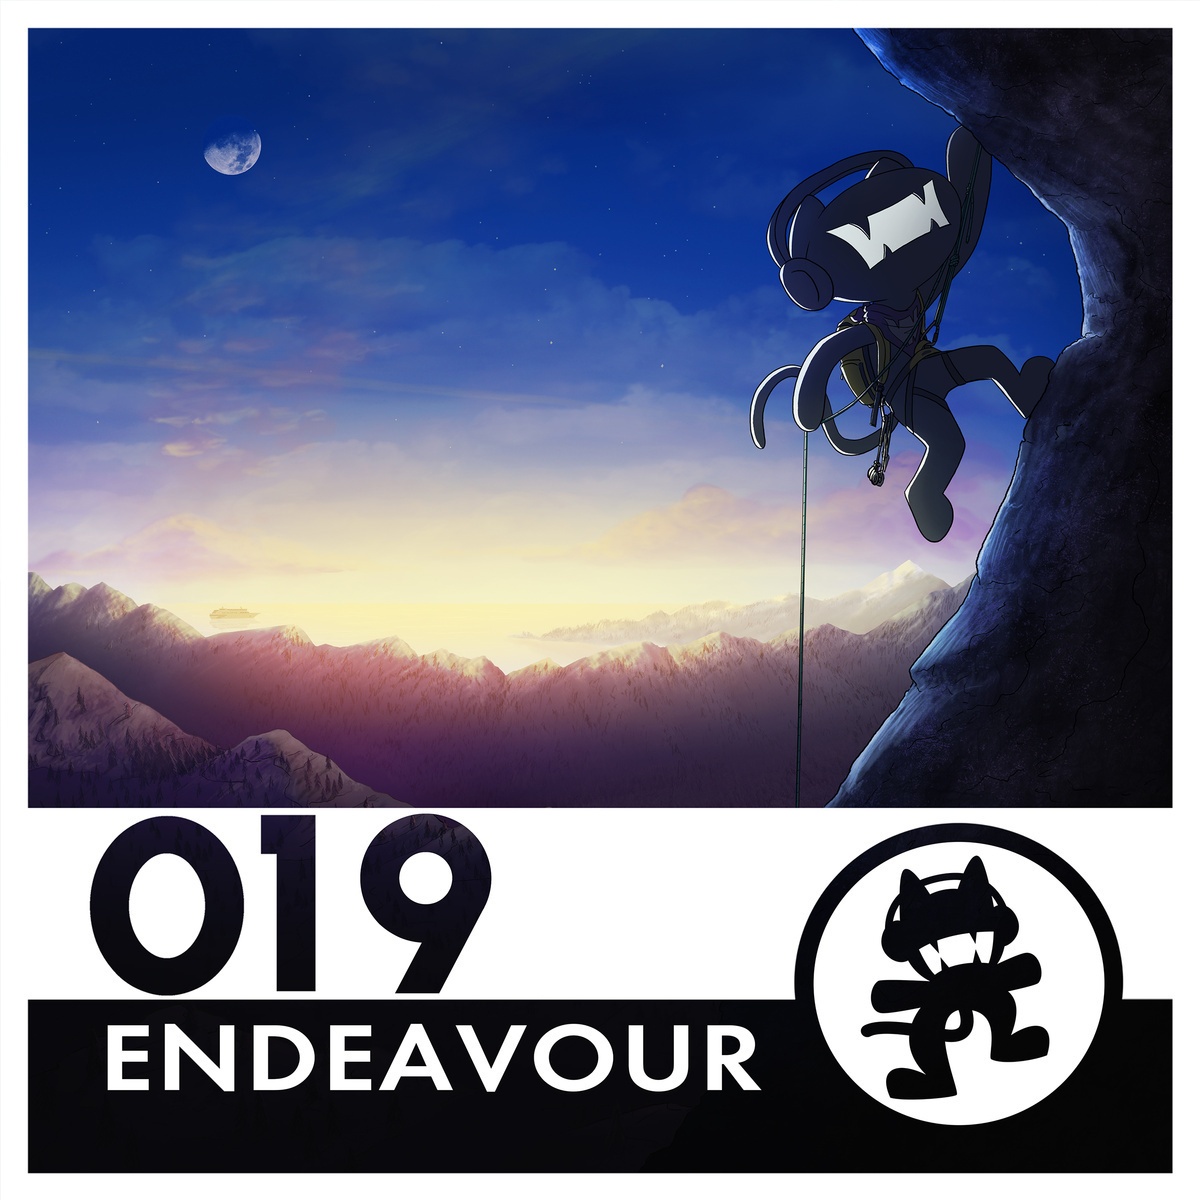 Monstercat 019 - Endeavour